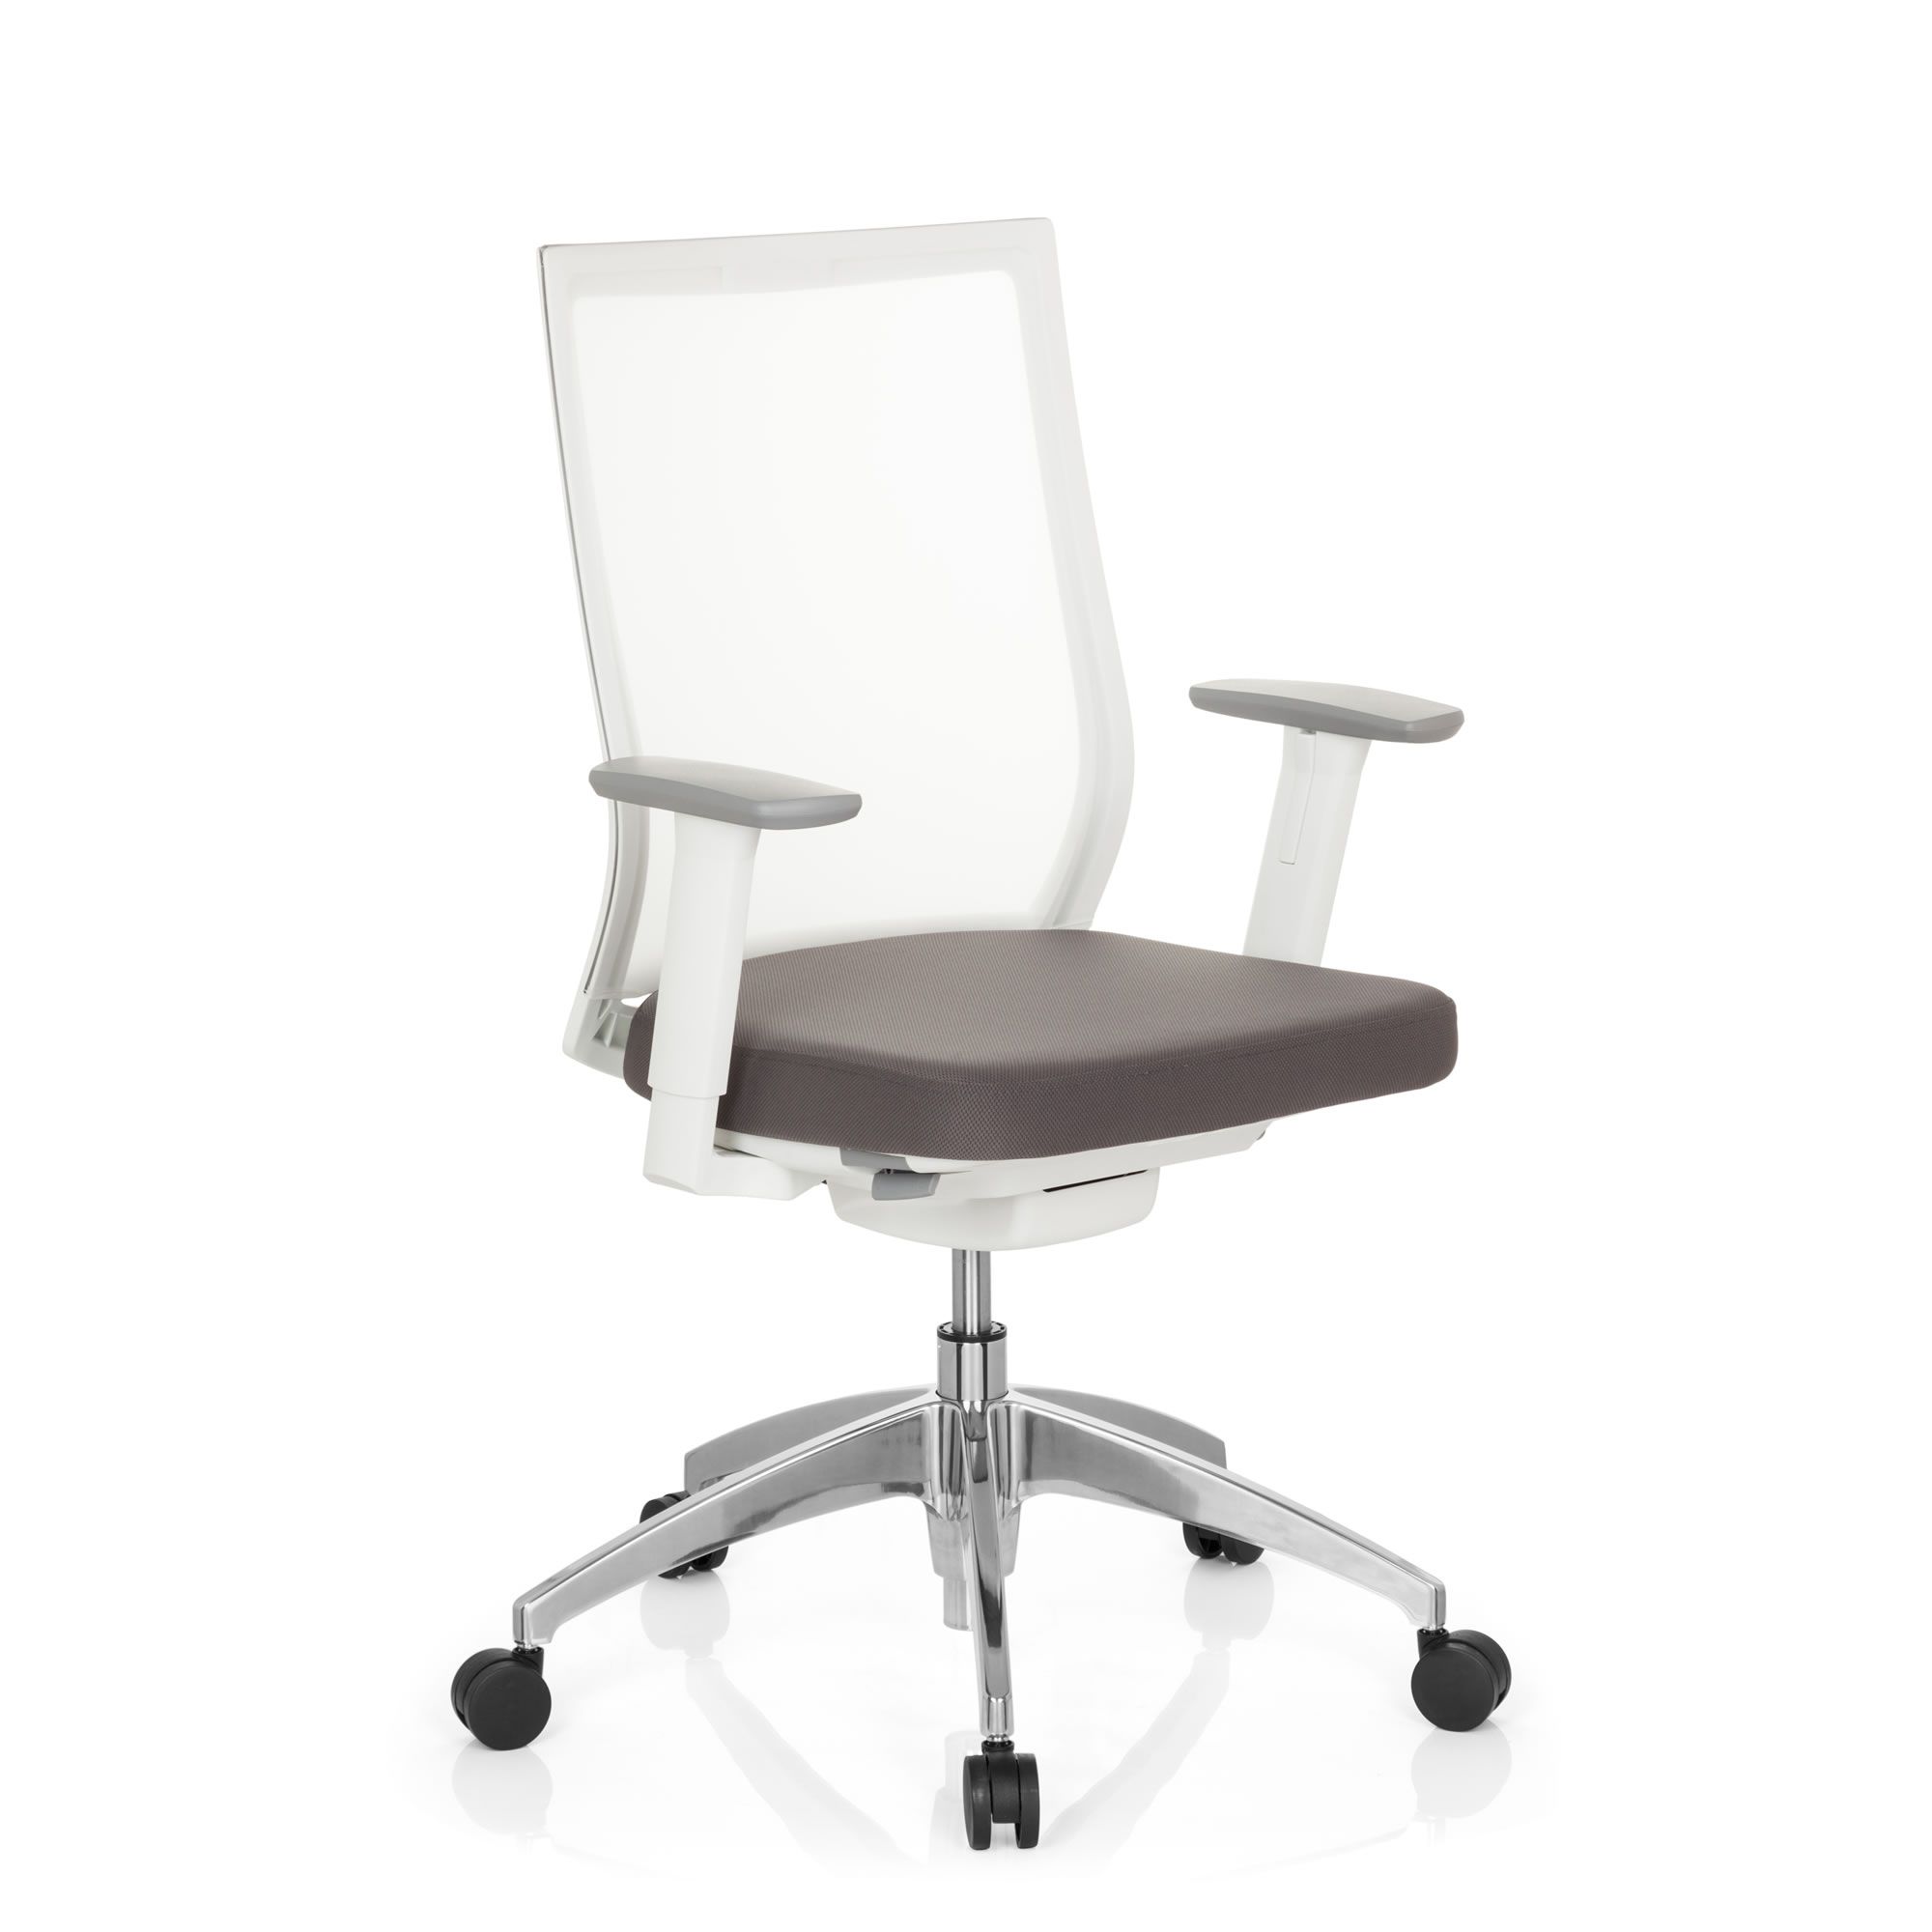 Bürostuhl / Drehstuhl ASPEN WHITE Netzstoff transparent / Sitz Stoff hjh OFFICE